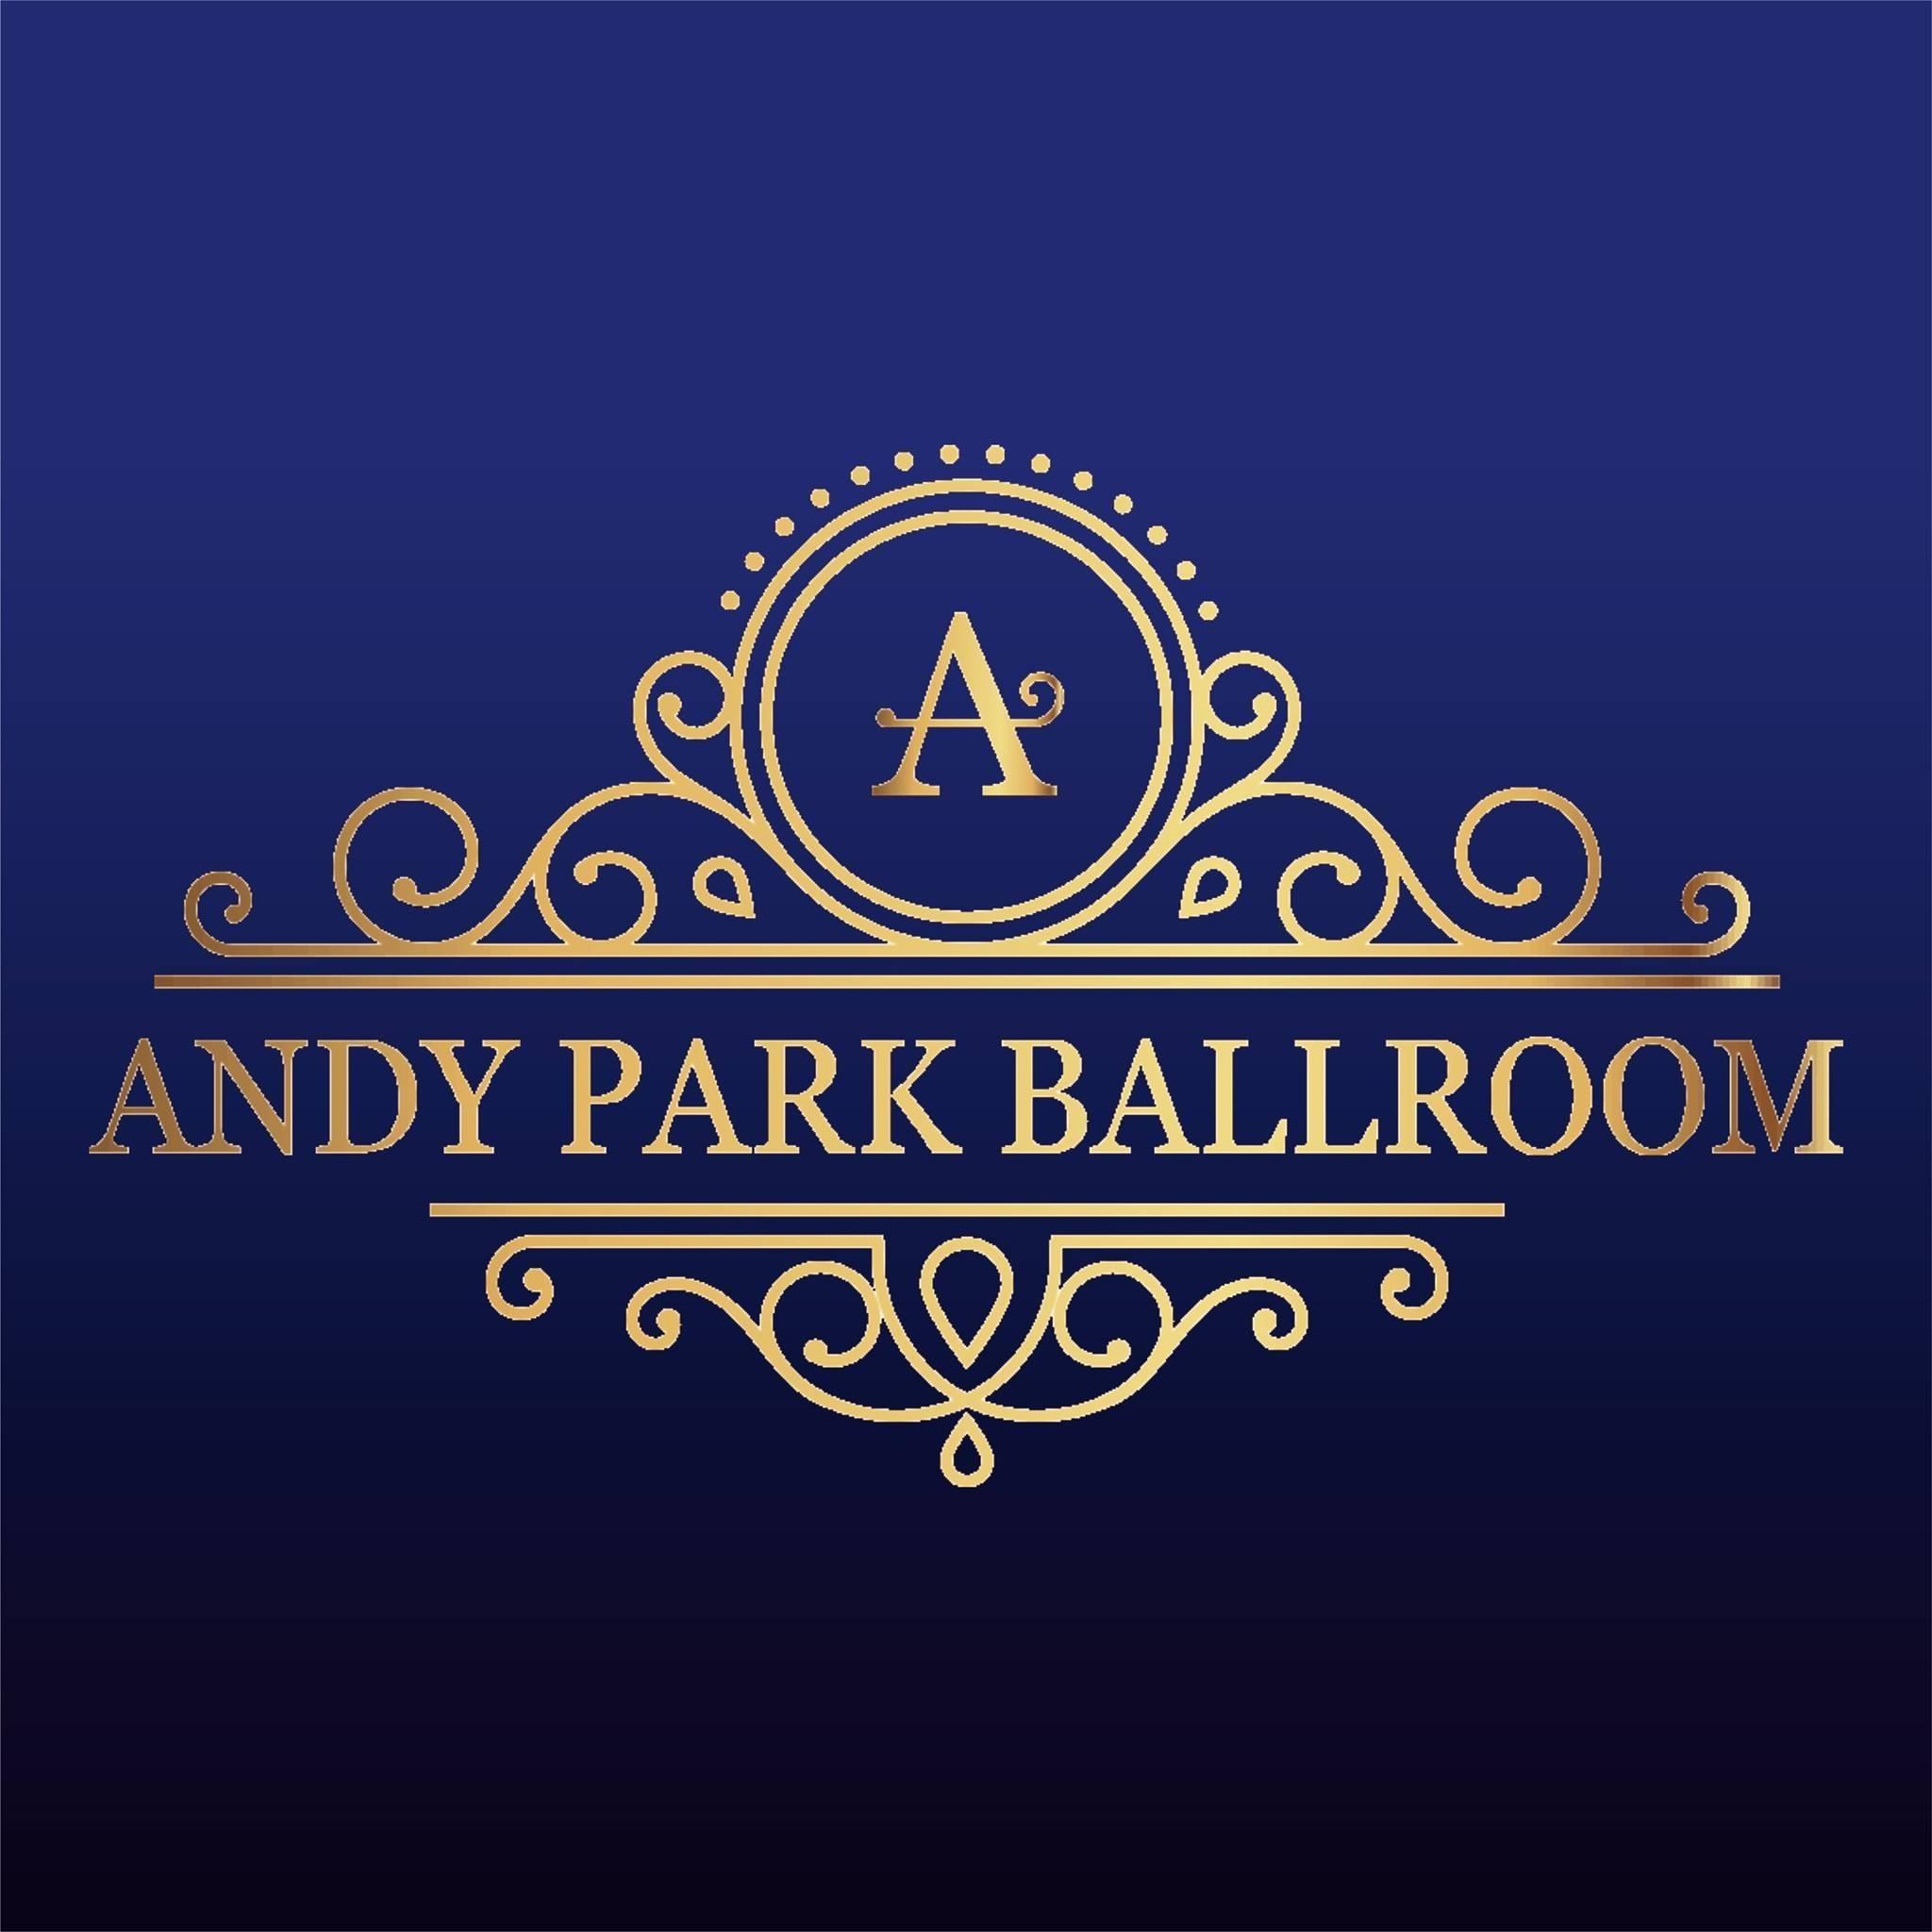 Andy Park Ballroom